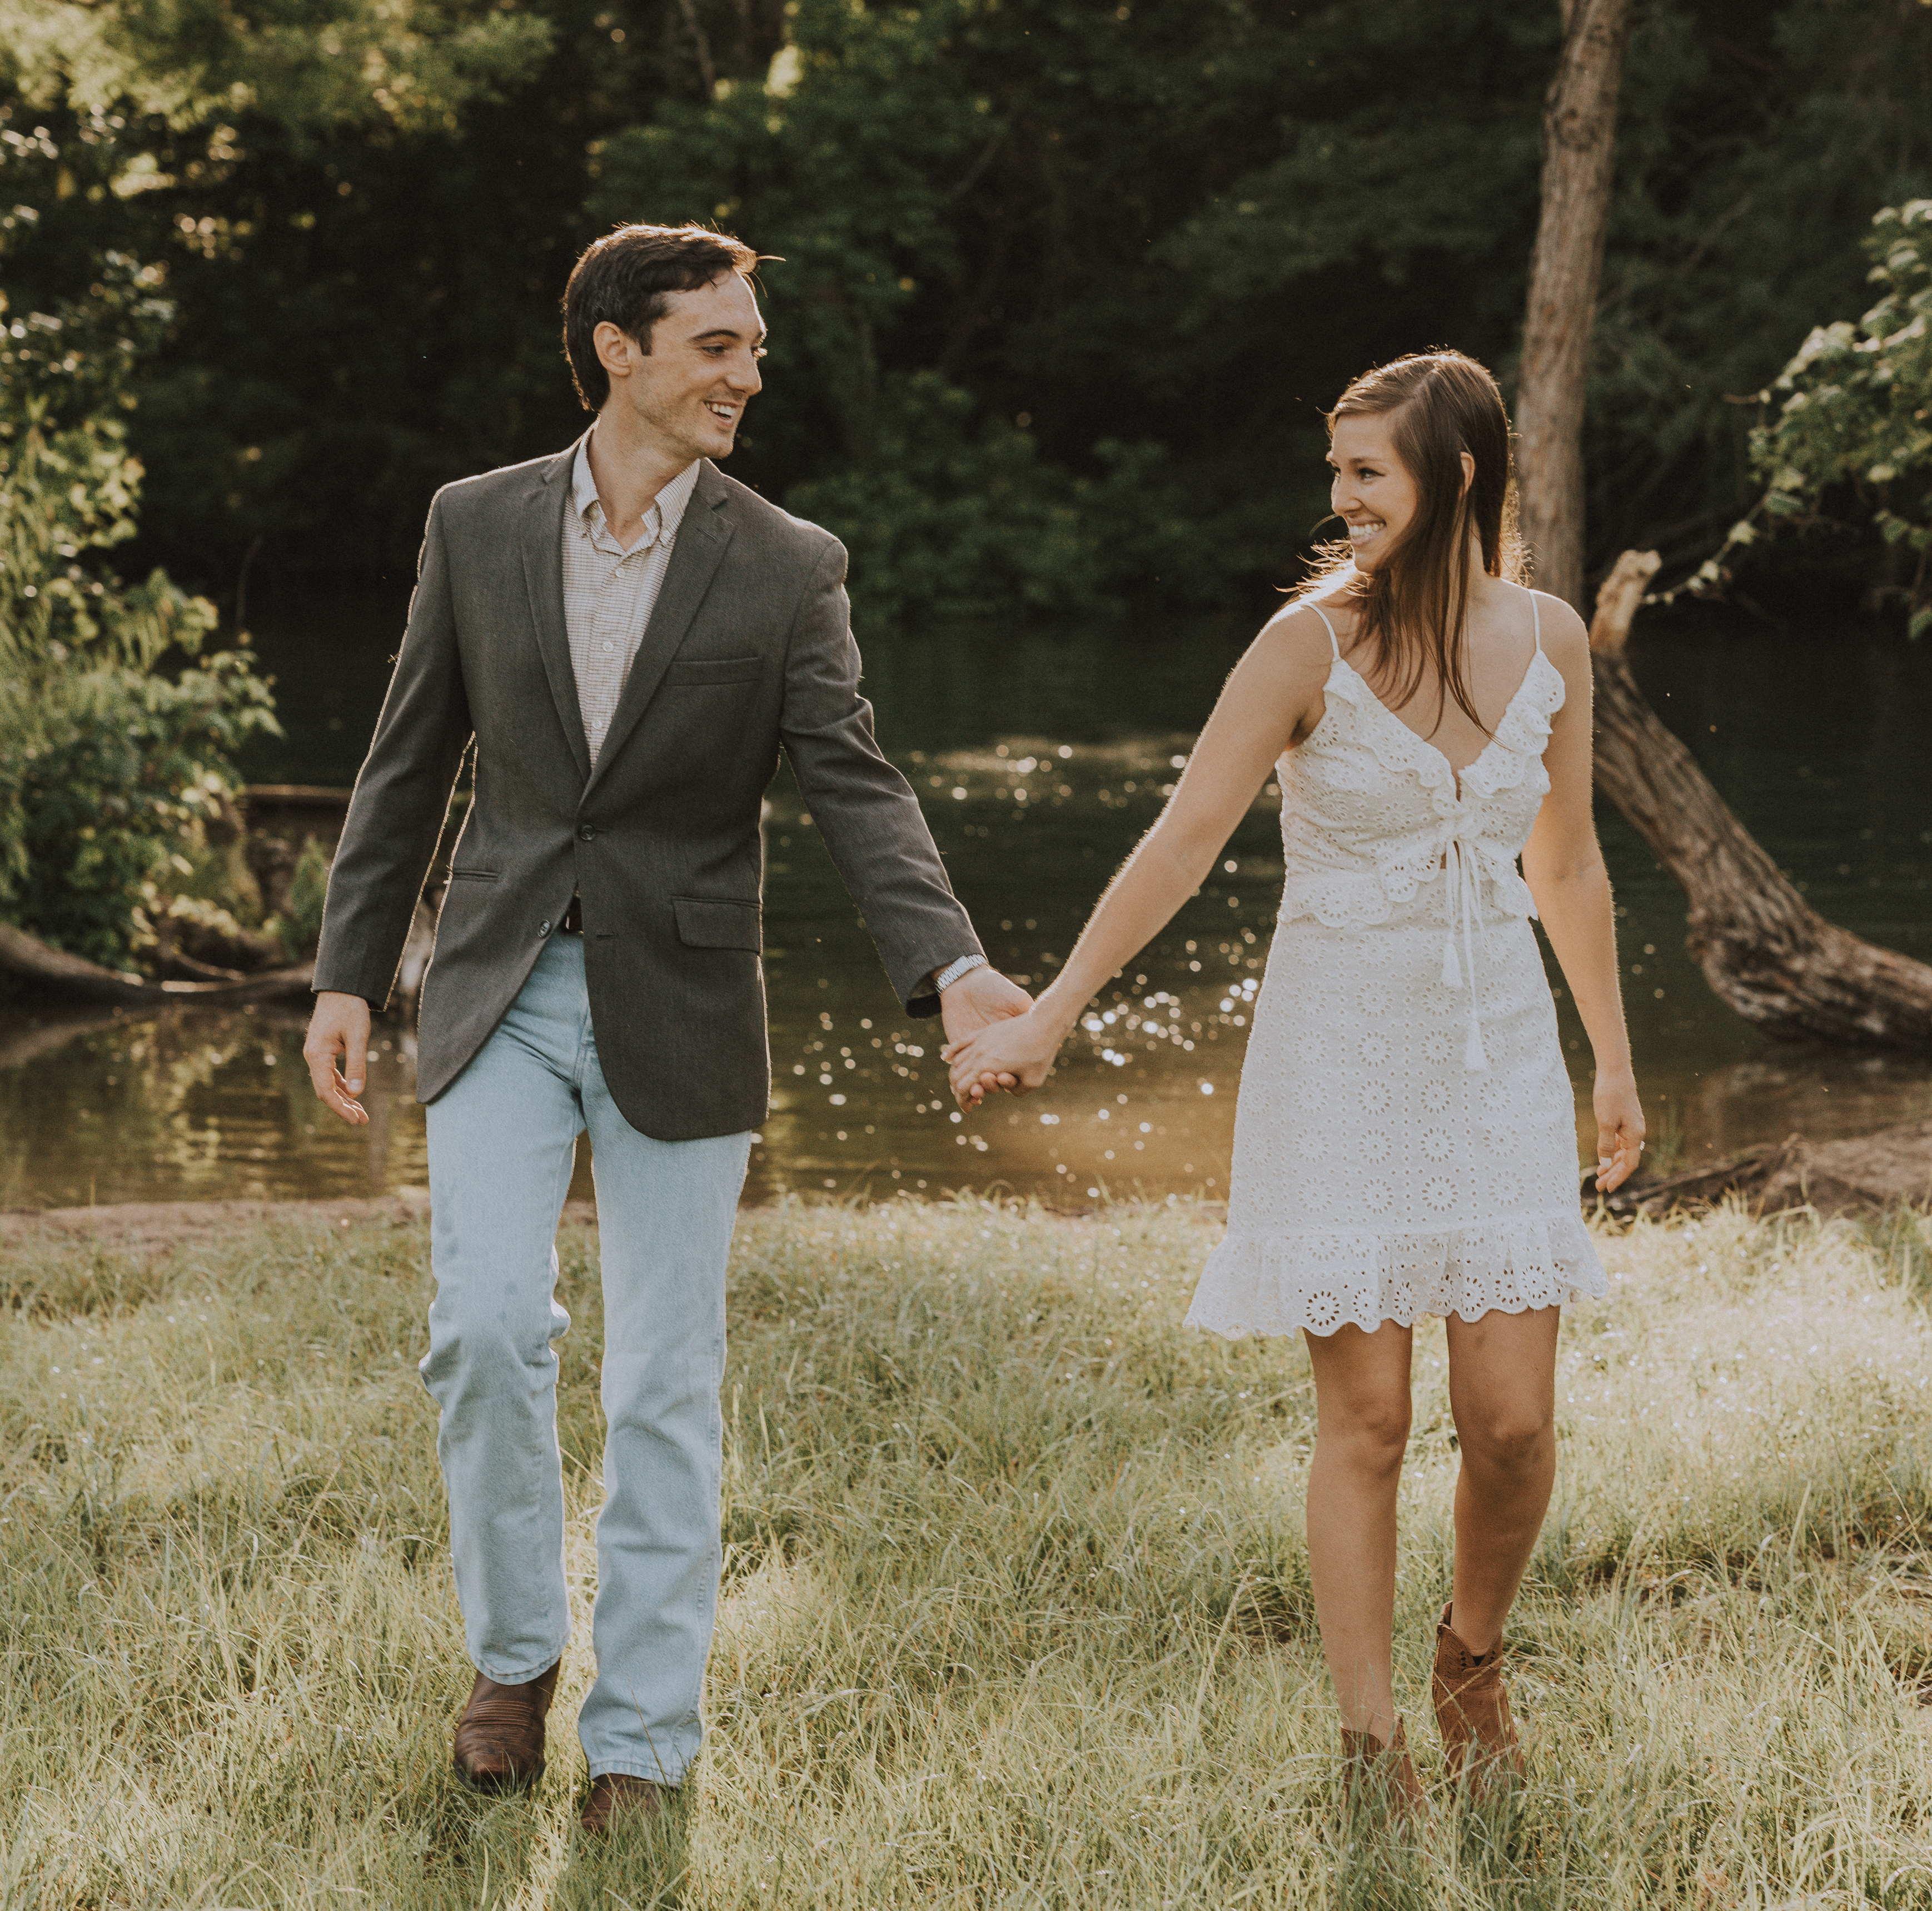 The Wedding Website of Sarah Case and Peter Chaze